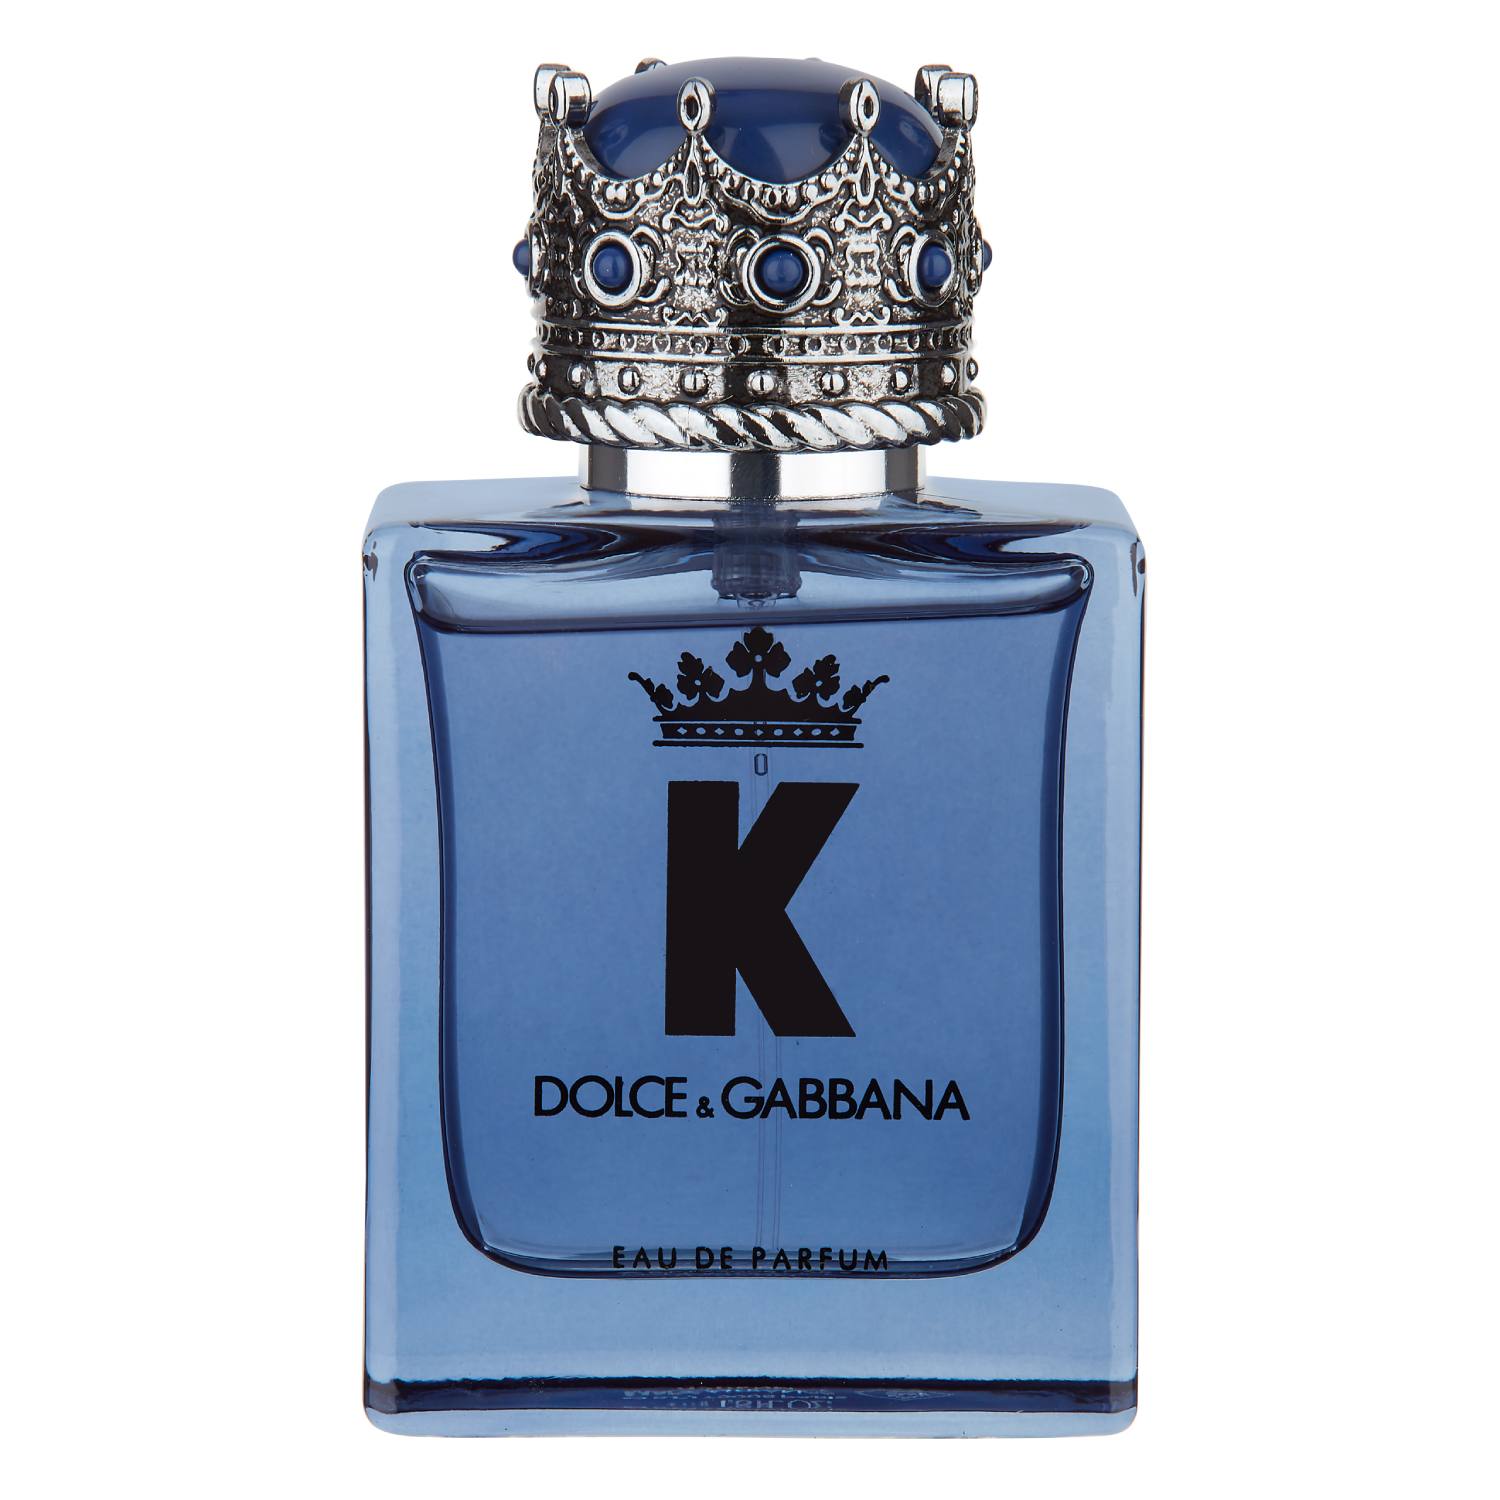 DOLCE GABBANA  " K  "  eau de Parfum Spray